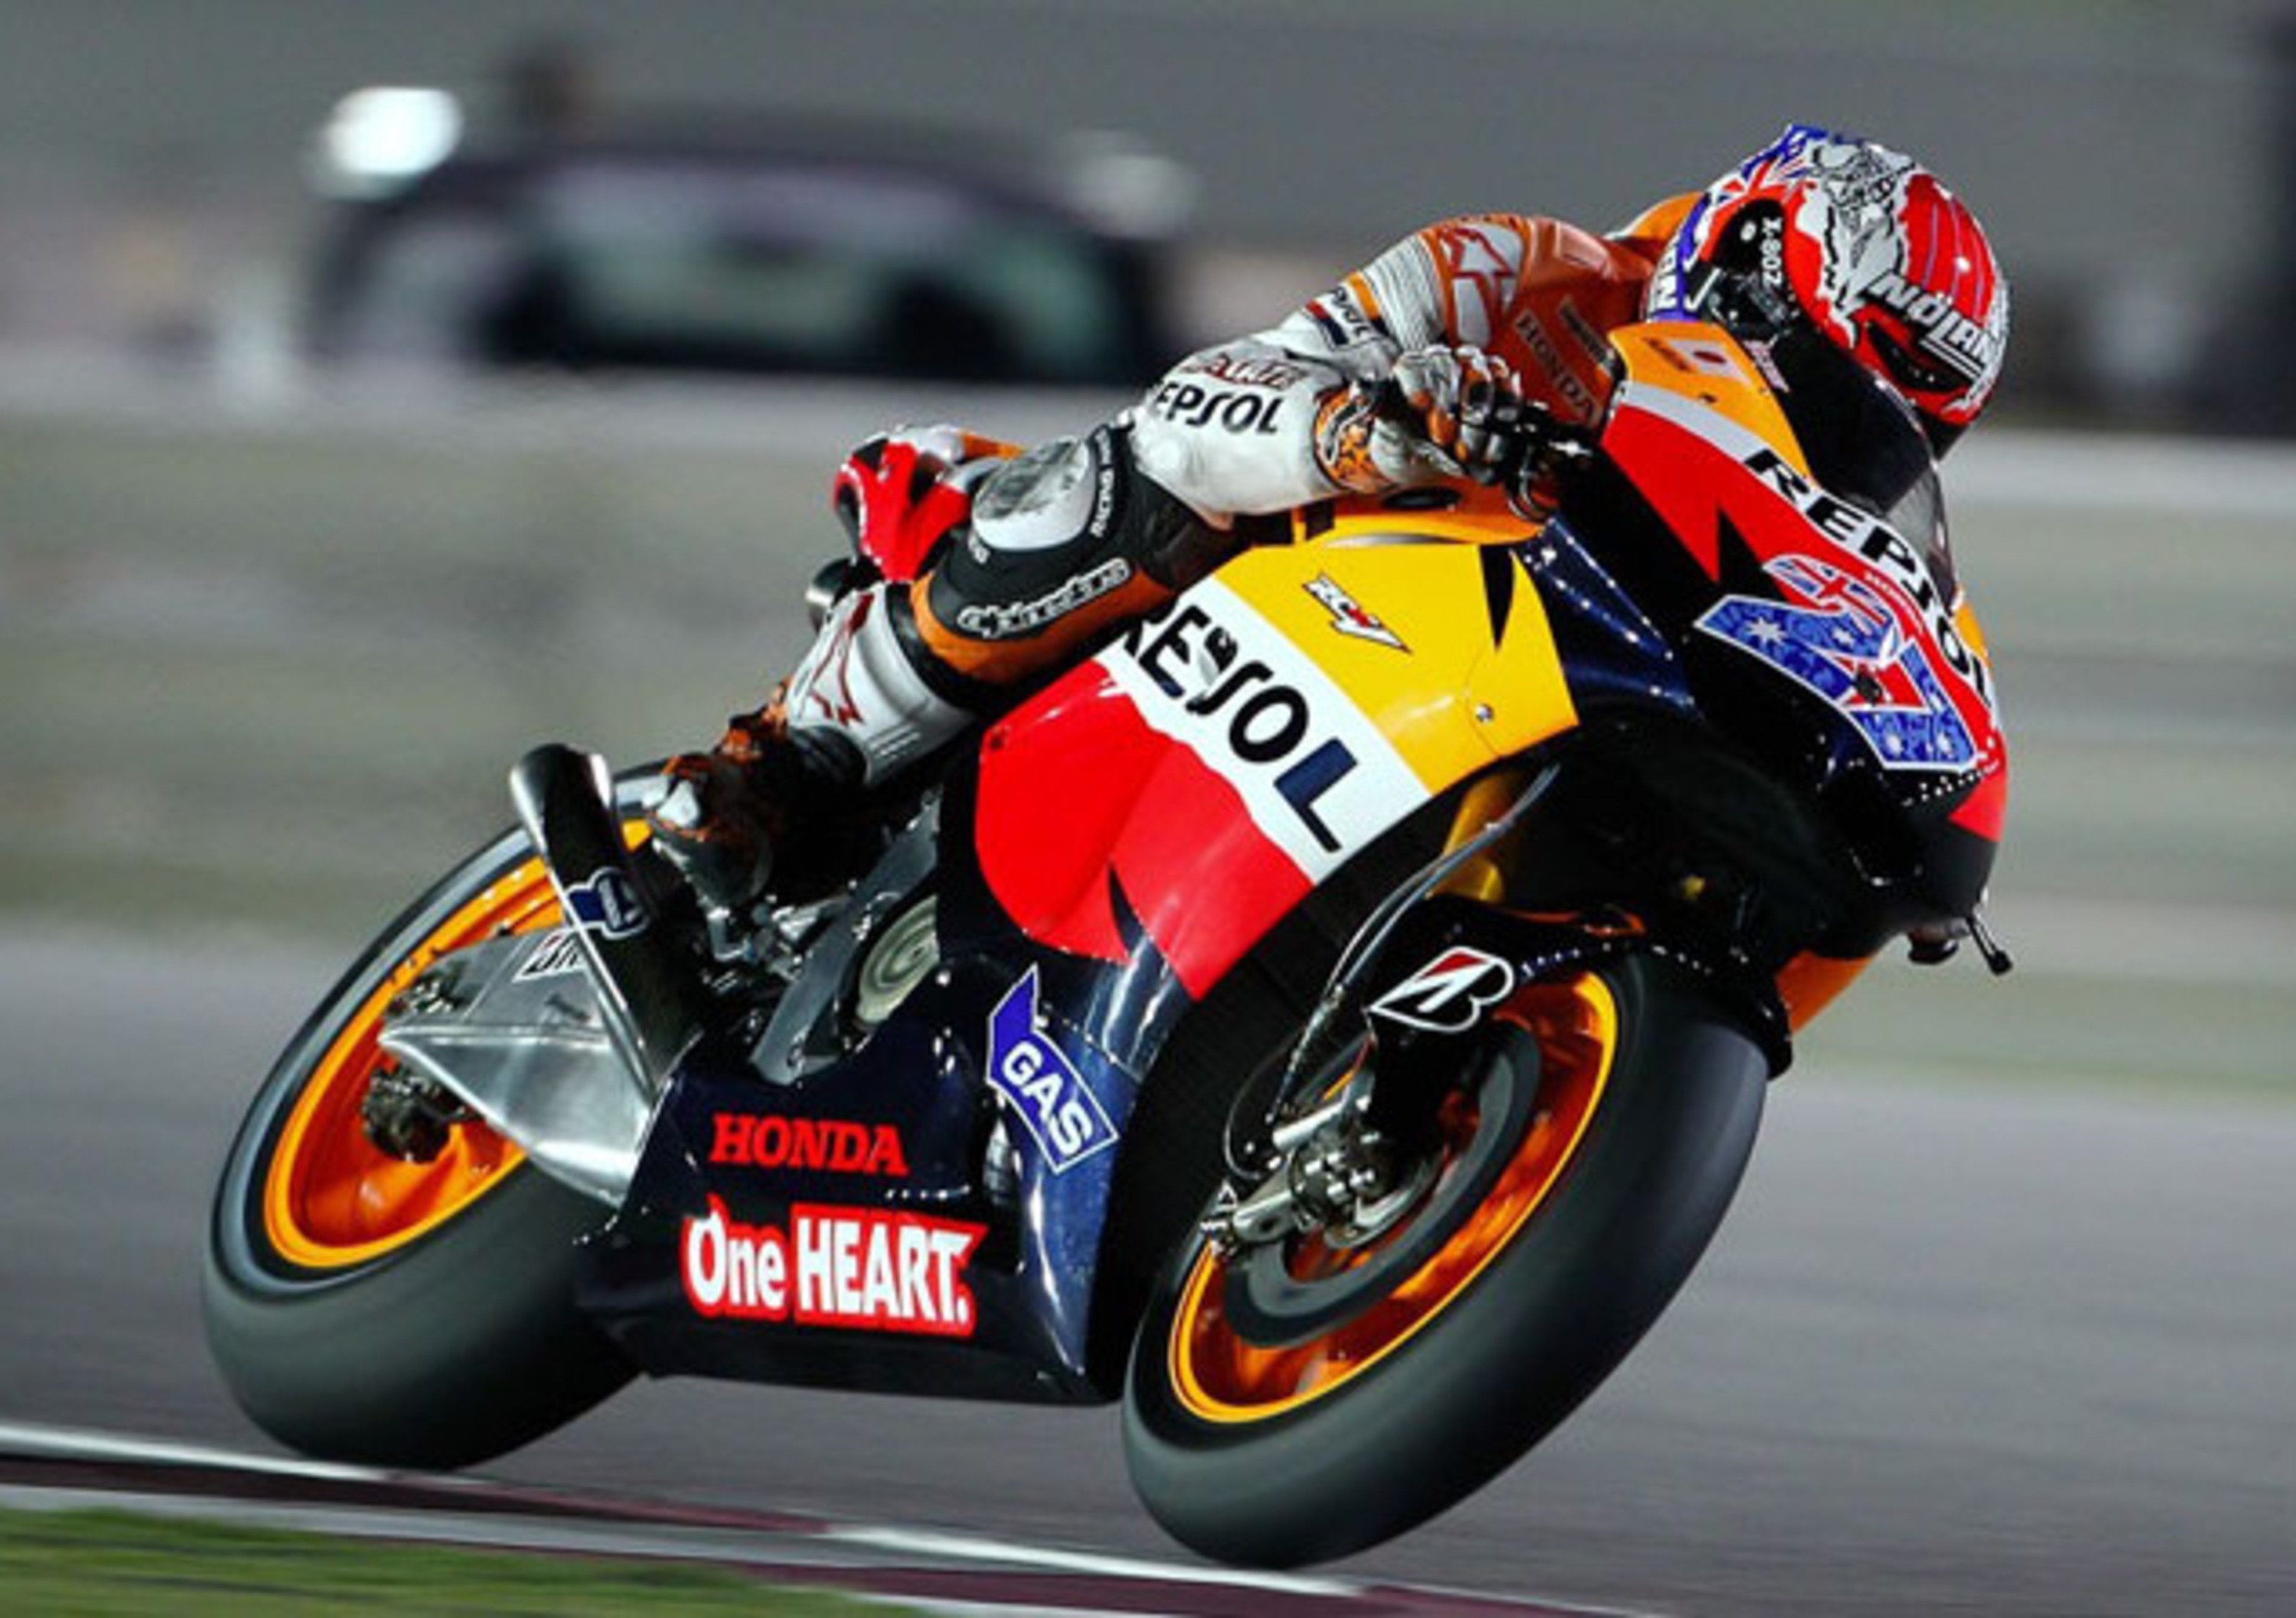 MotoGP, qualifiche GP del Qatar. Stoner e Pedrosa i piloti da battere